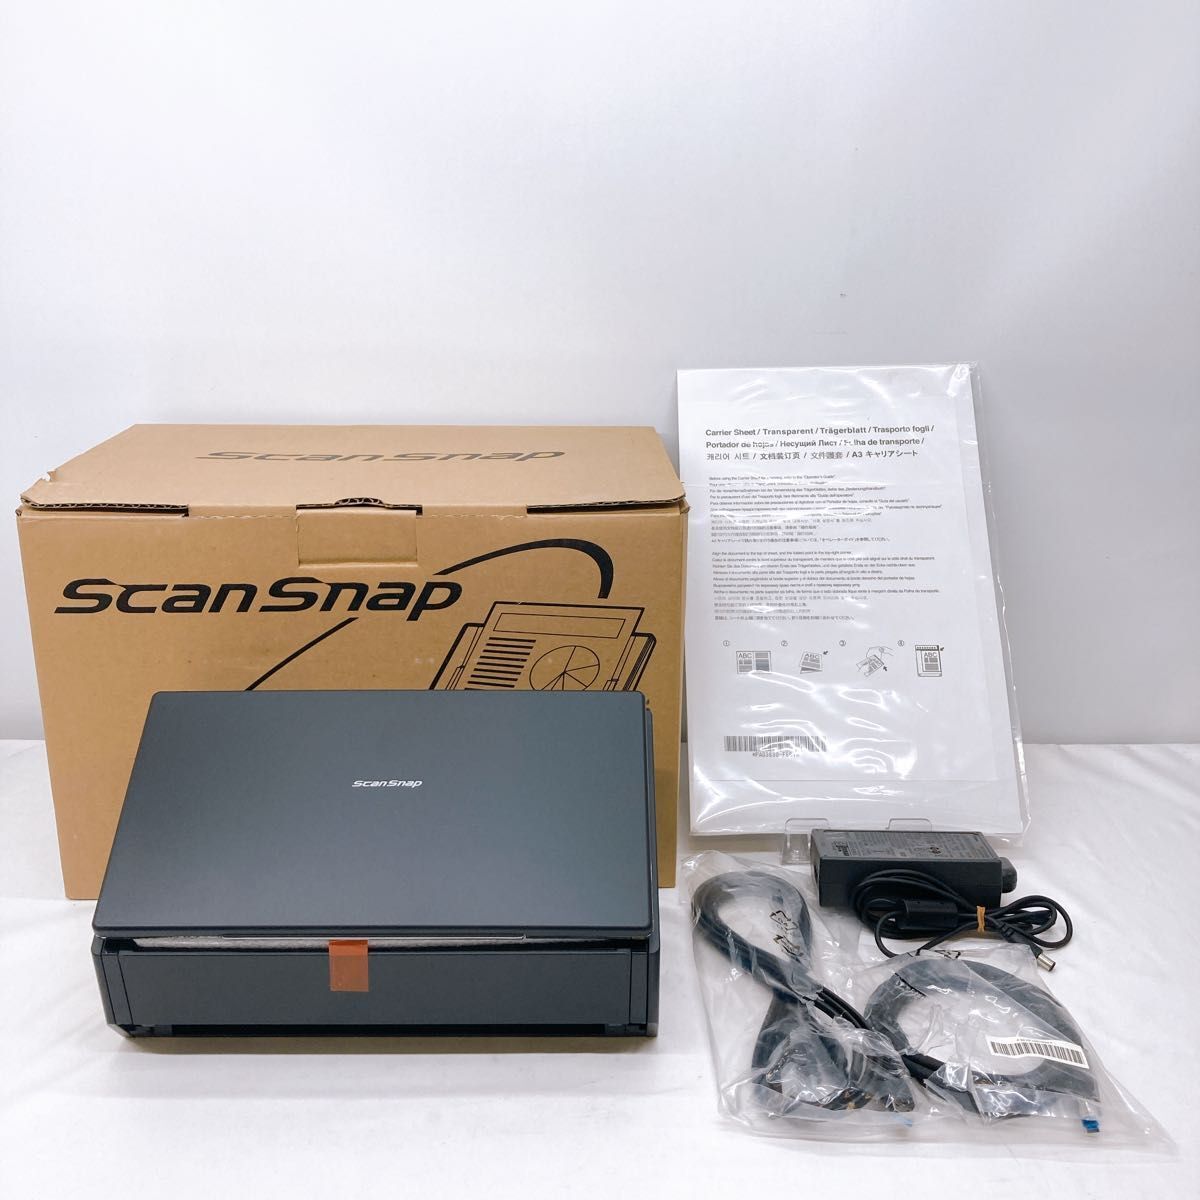 Open Box Fujitsu ScanSnap IX500 FI-IX500 Document Scanner Image Document